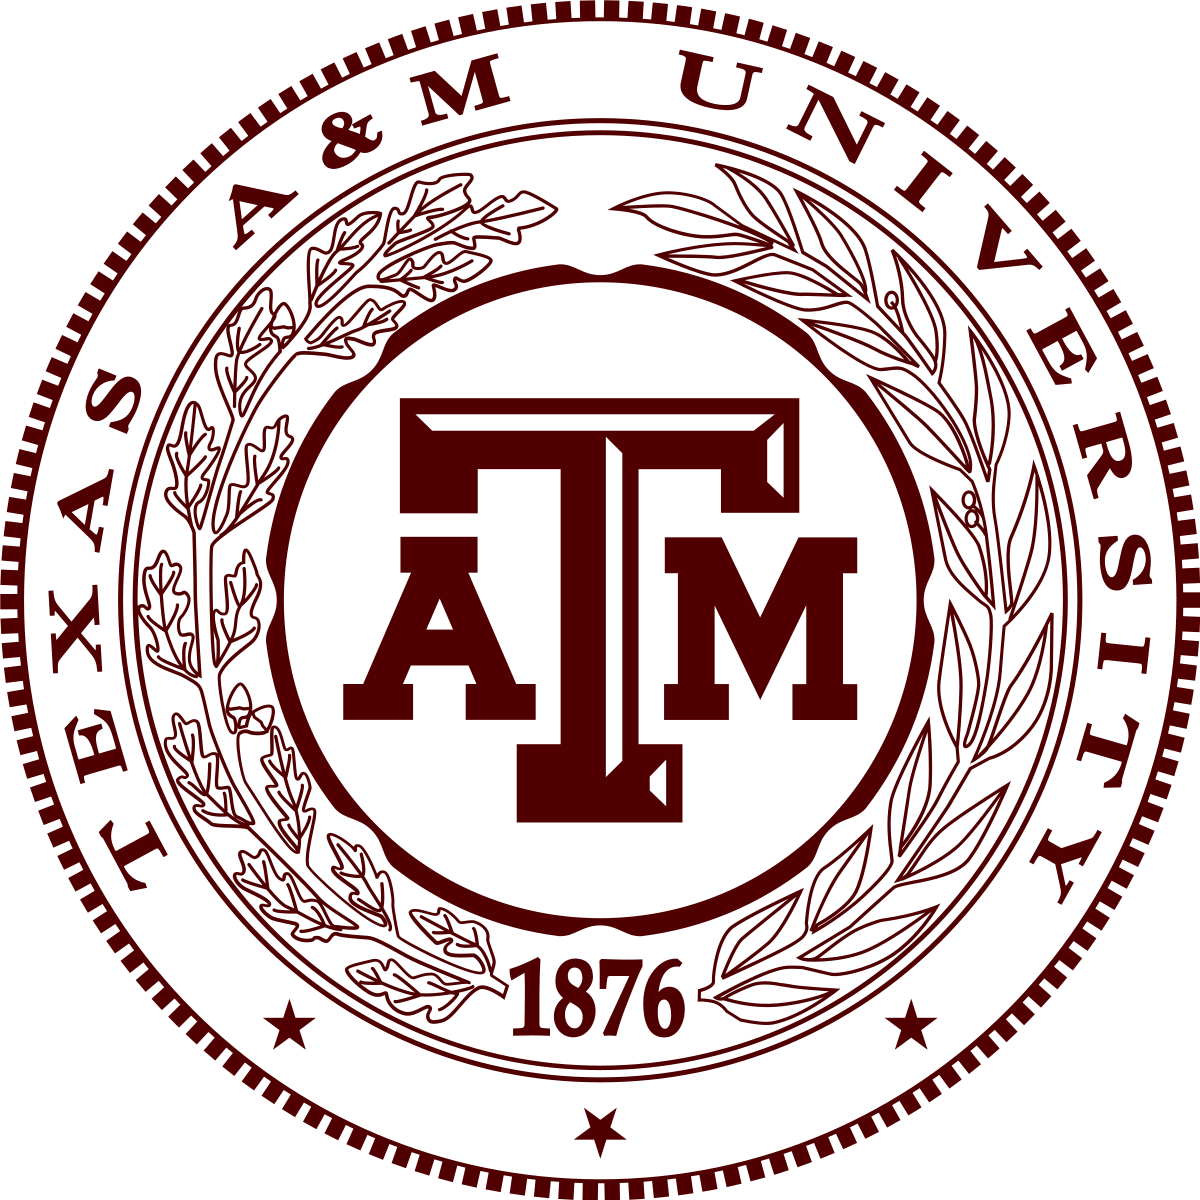 1200px-Texas_A&M_University_seal.svg